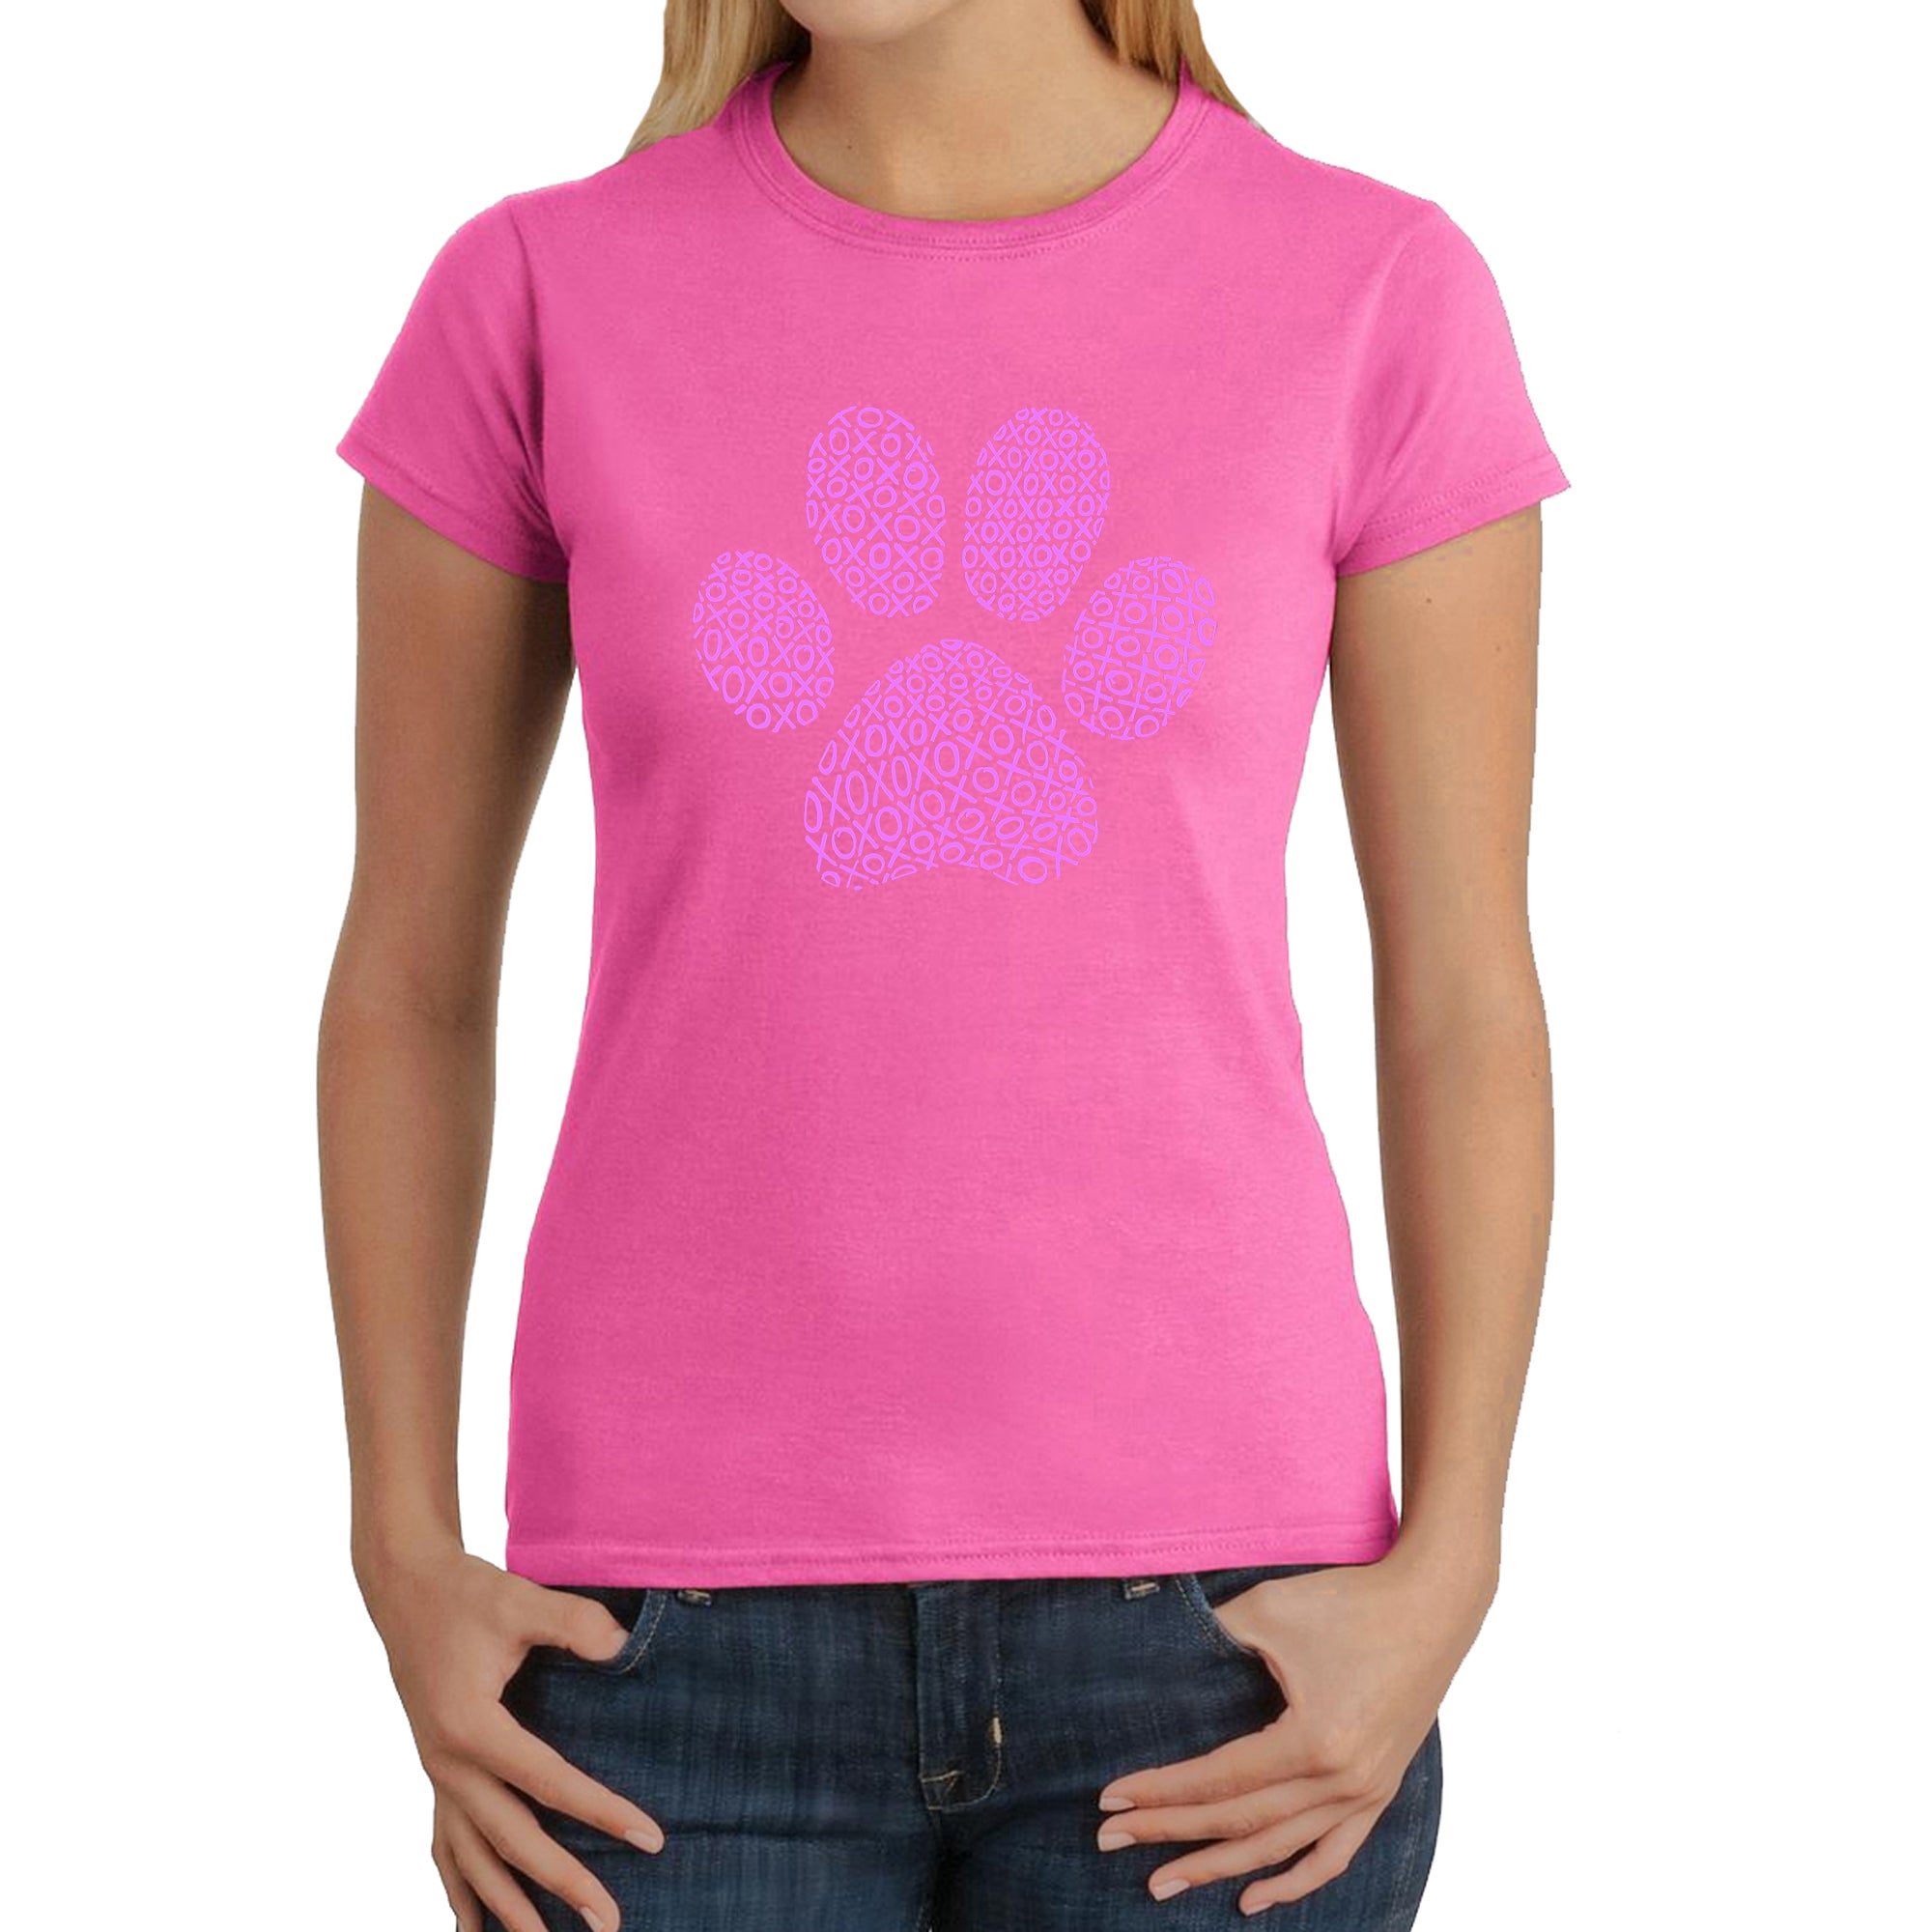 XOXO Dog Paw - Women's Word Art T-Shirt - X-Large - Pink